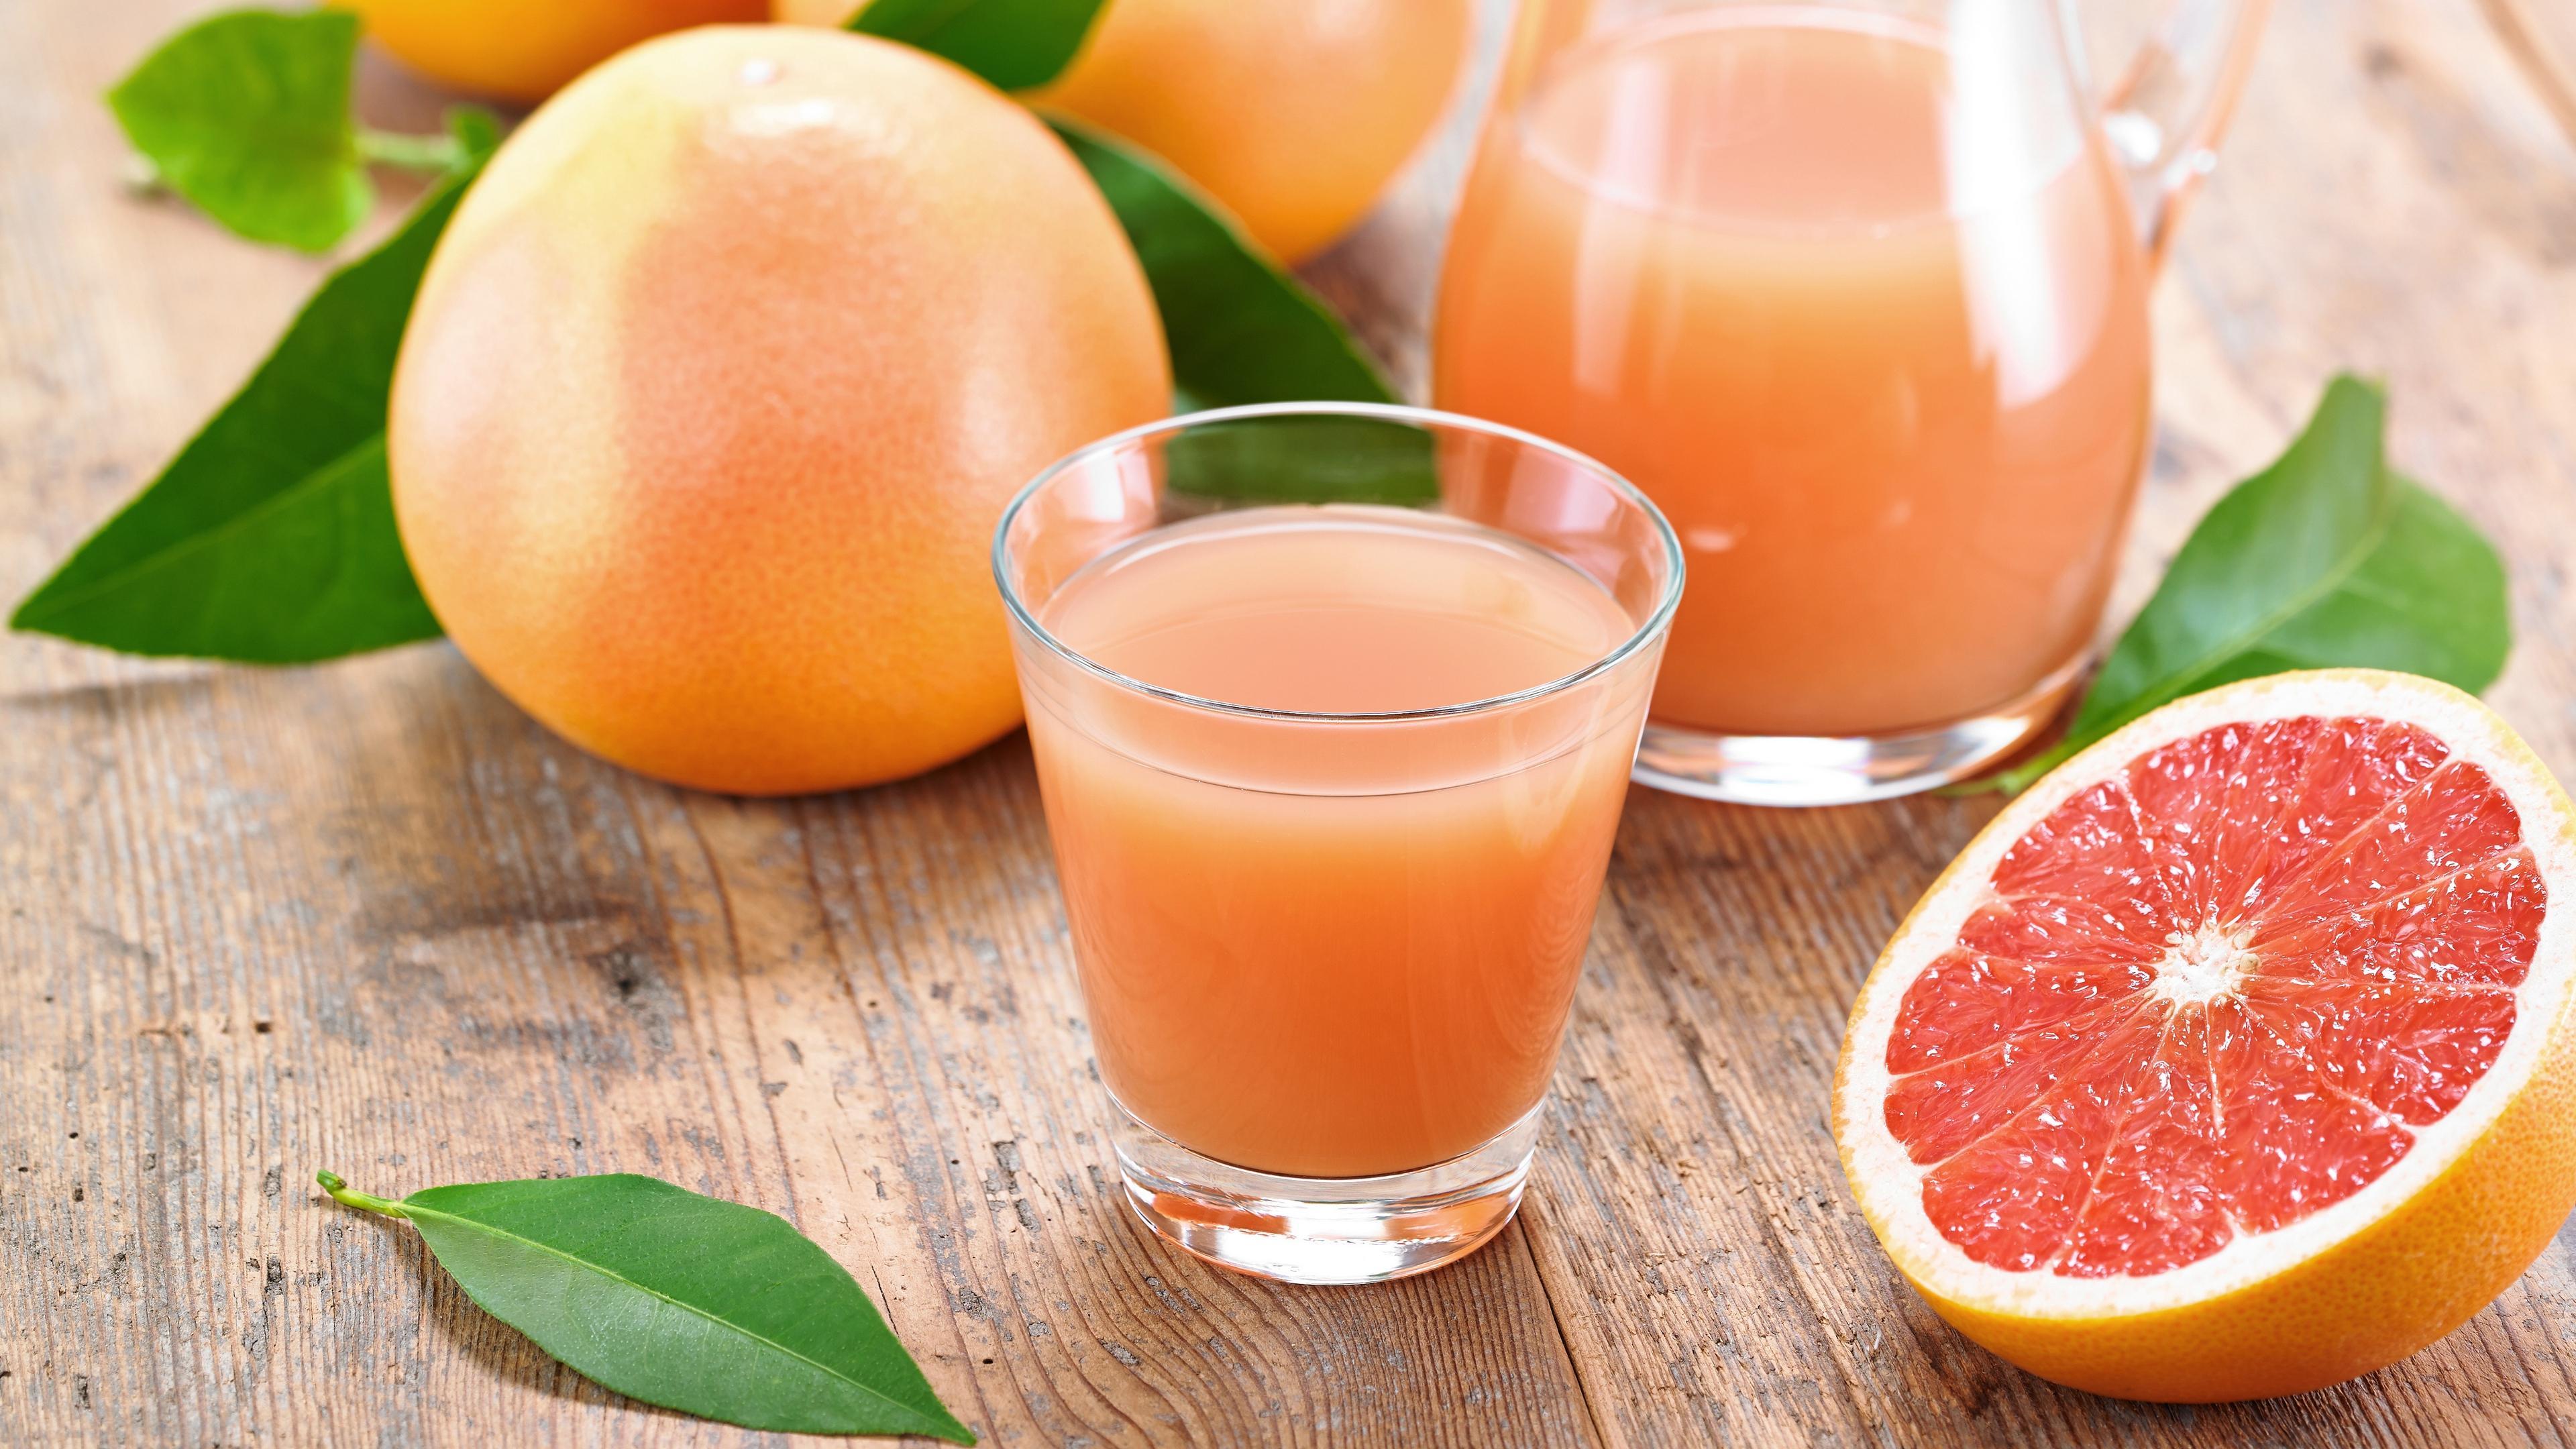 Download wallpaper 3840x2160 grapefruit, juice, fruit, citrus 4k uhd